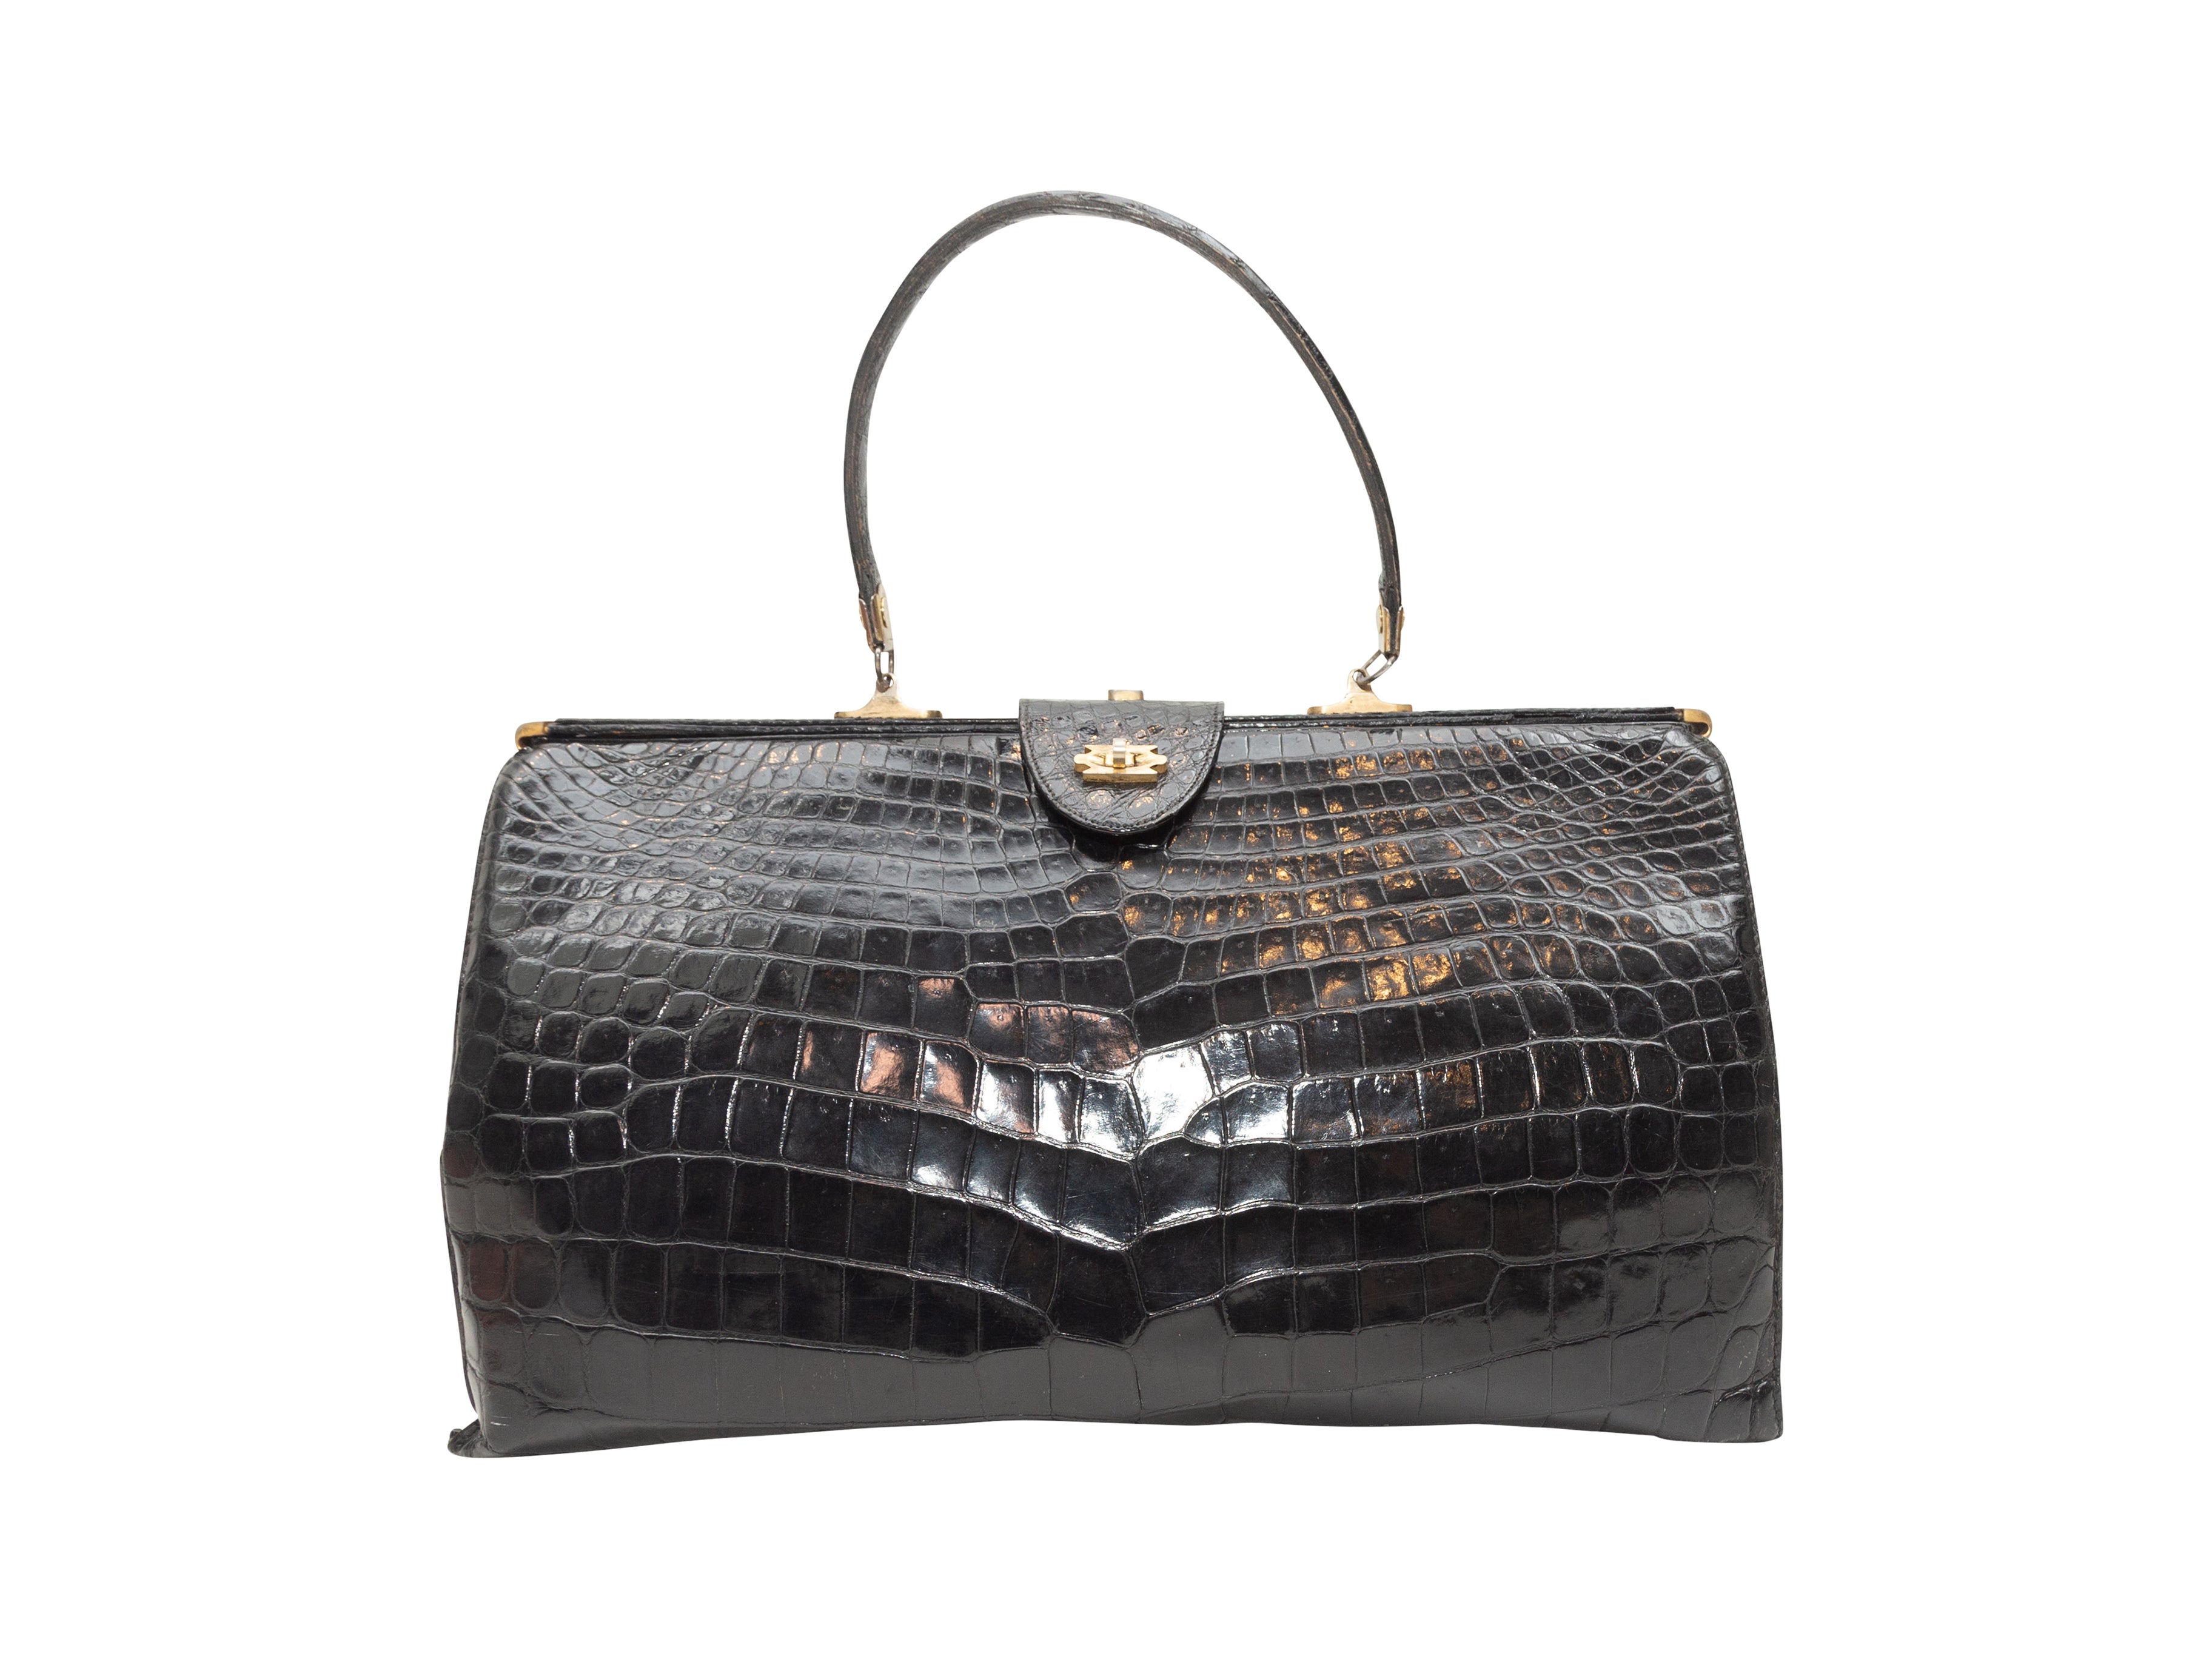 SOLIQUE vintage handbag black patent leather and crocodile leather